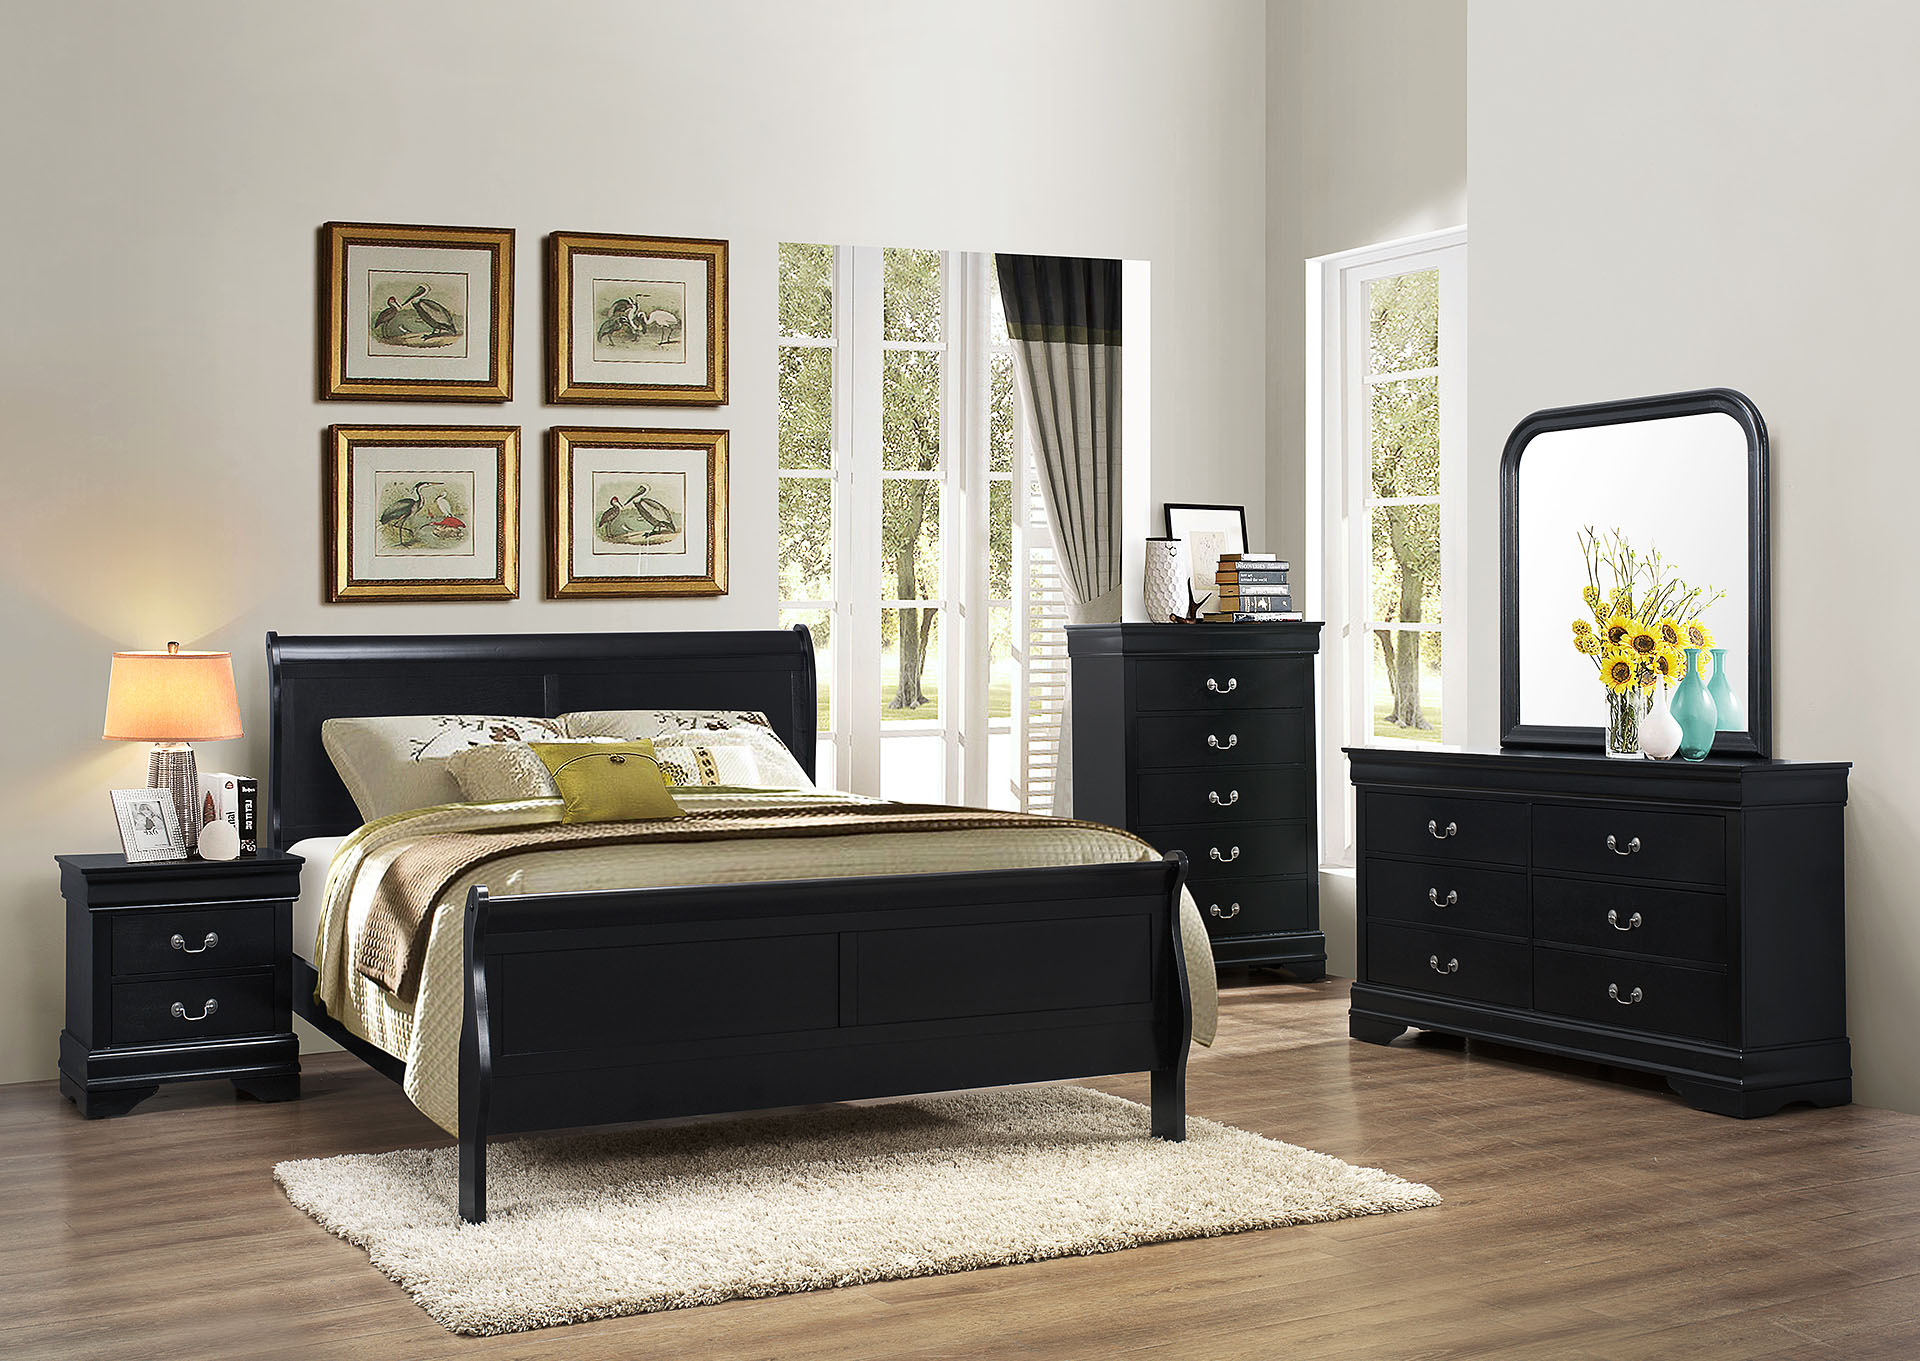 Twin Bed,Galaxy Home Furniture